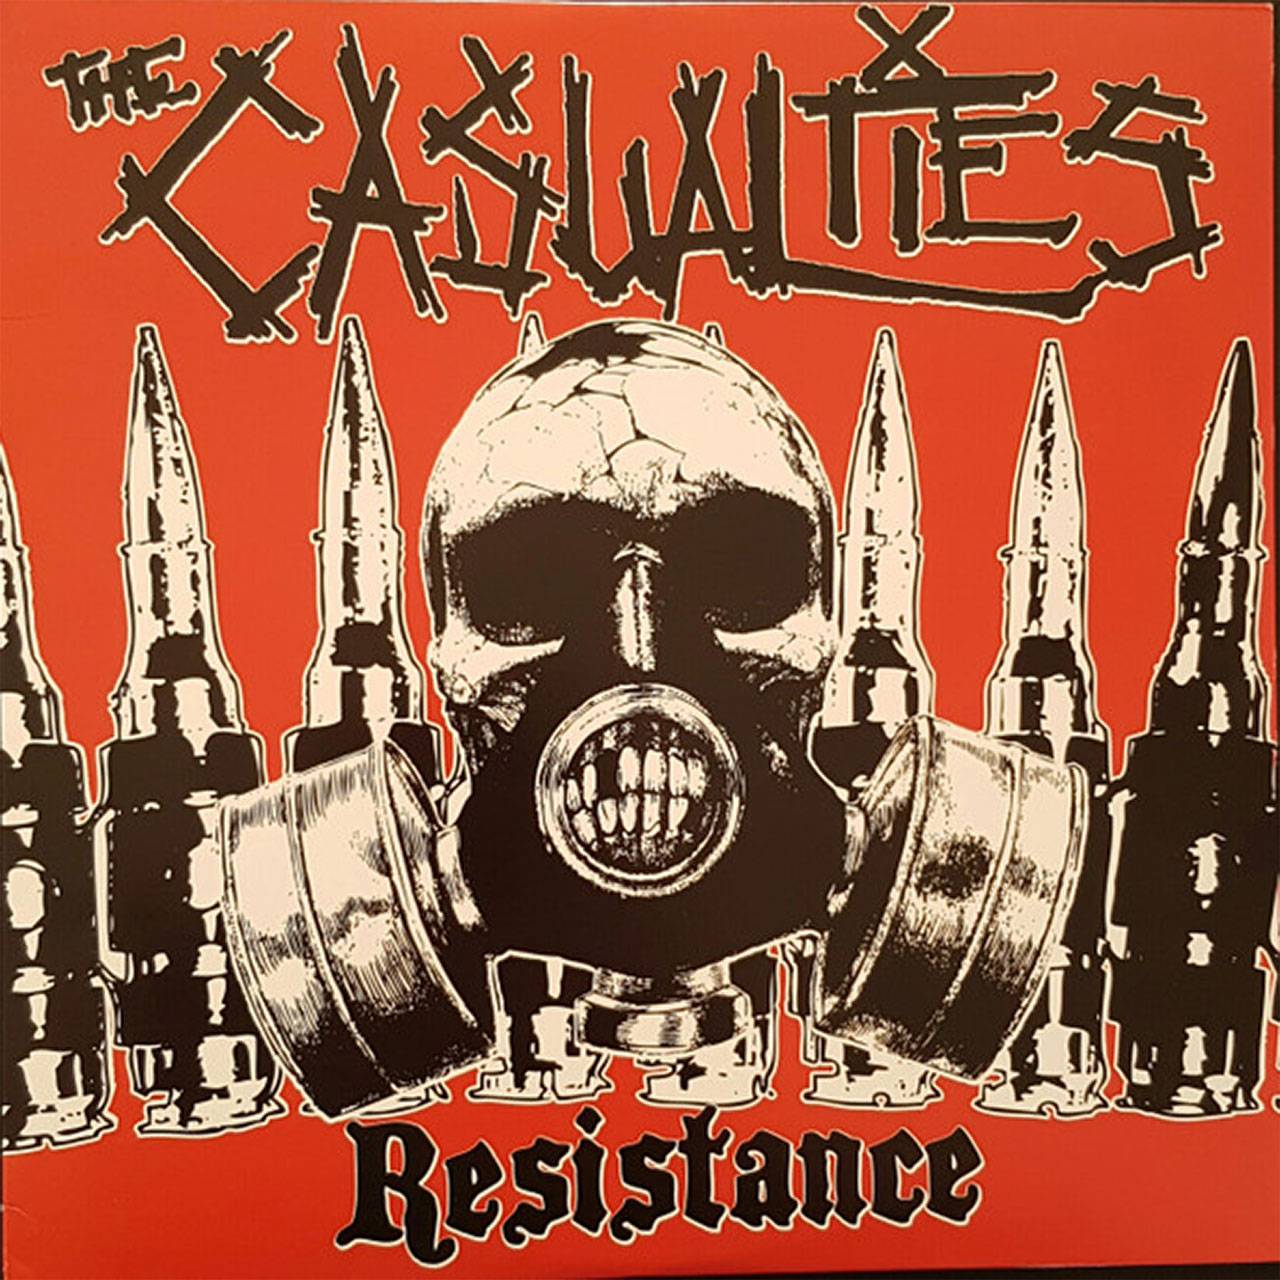 The Casualties - Resistance (Ltd. Ed. Red Vinyl)